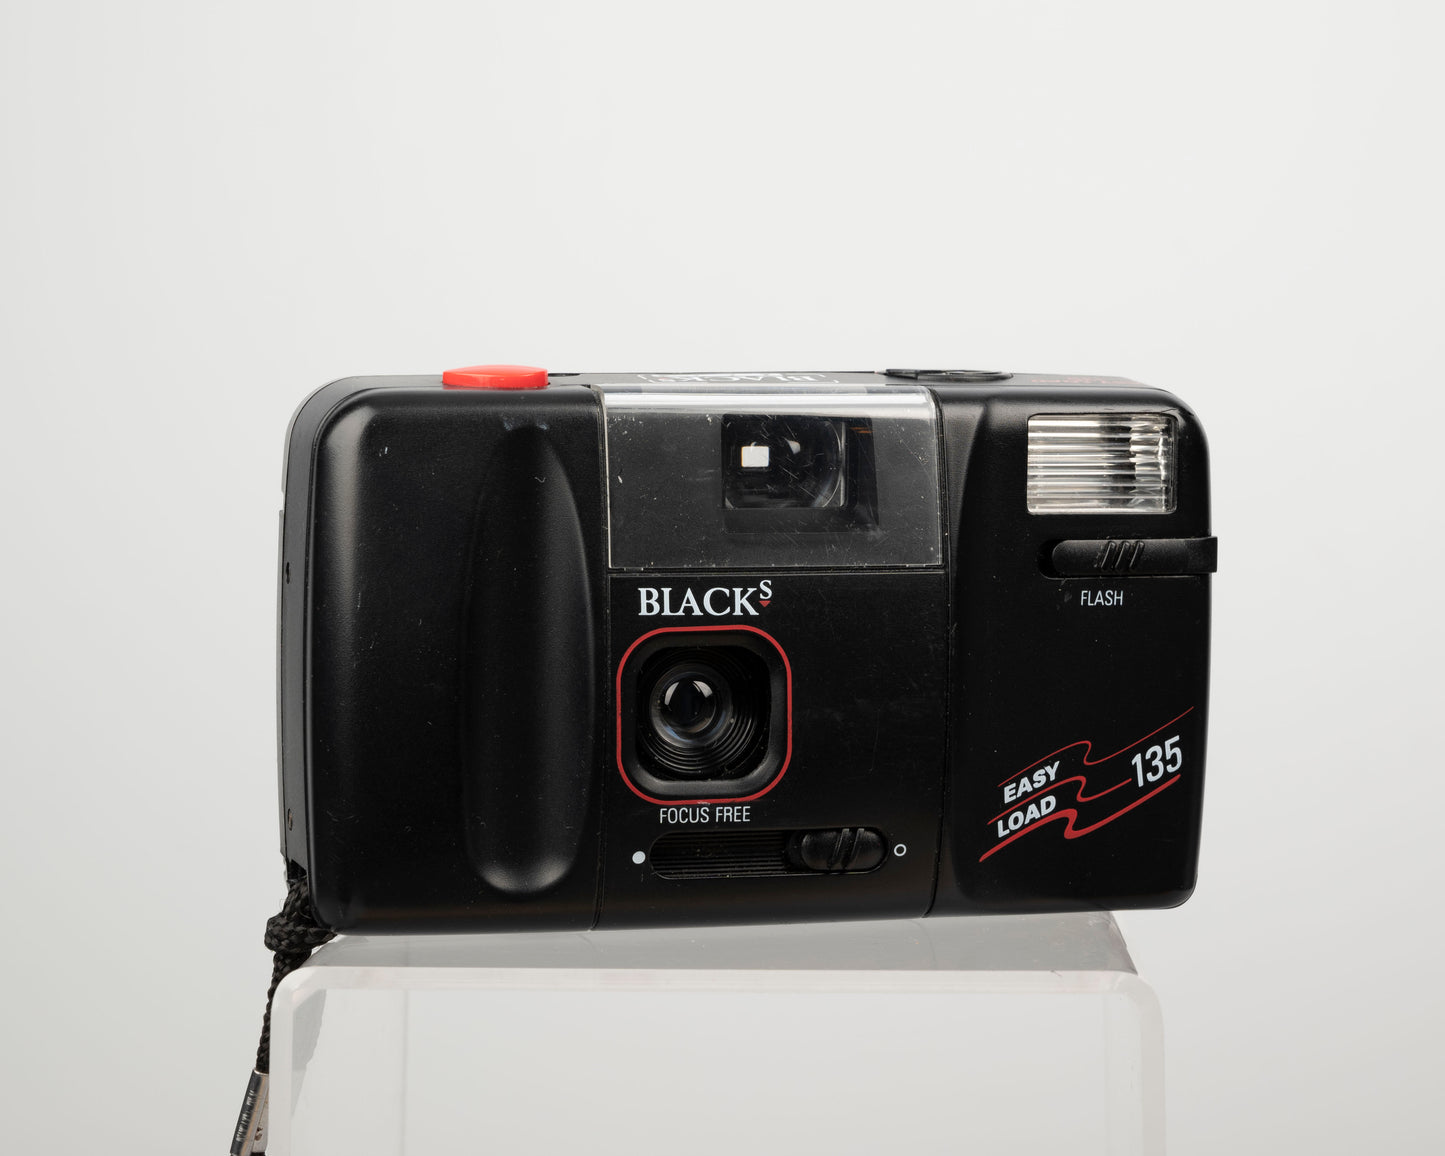 Black's Easy Load 135 35mm camera